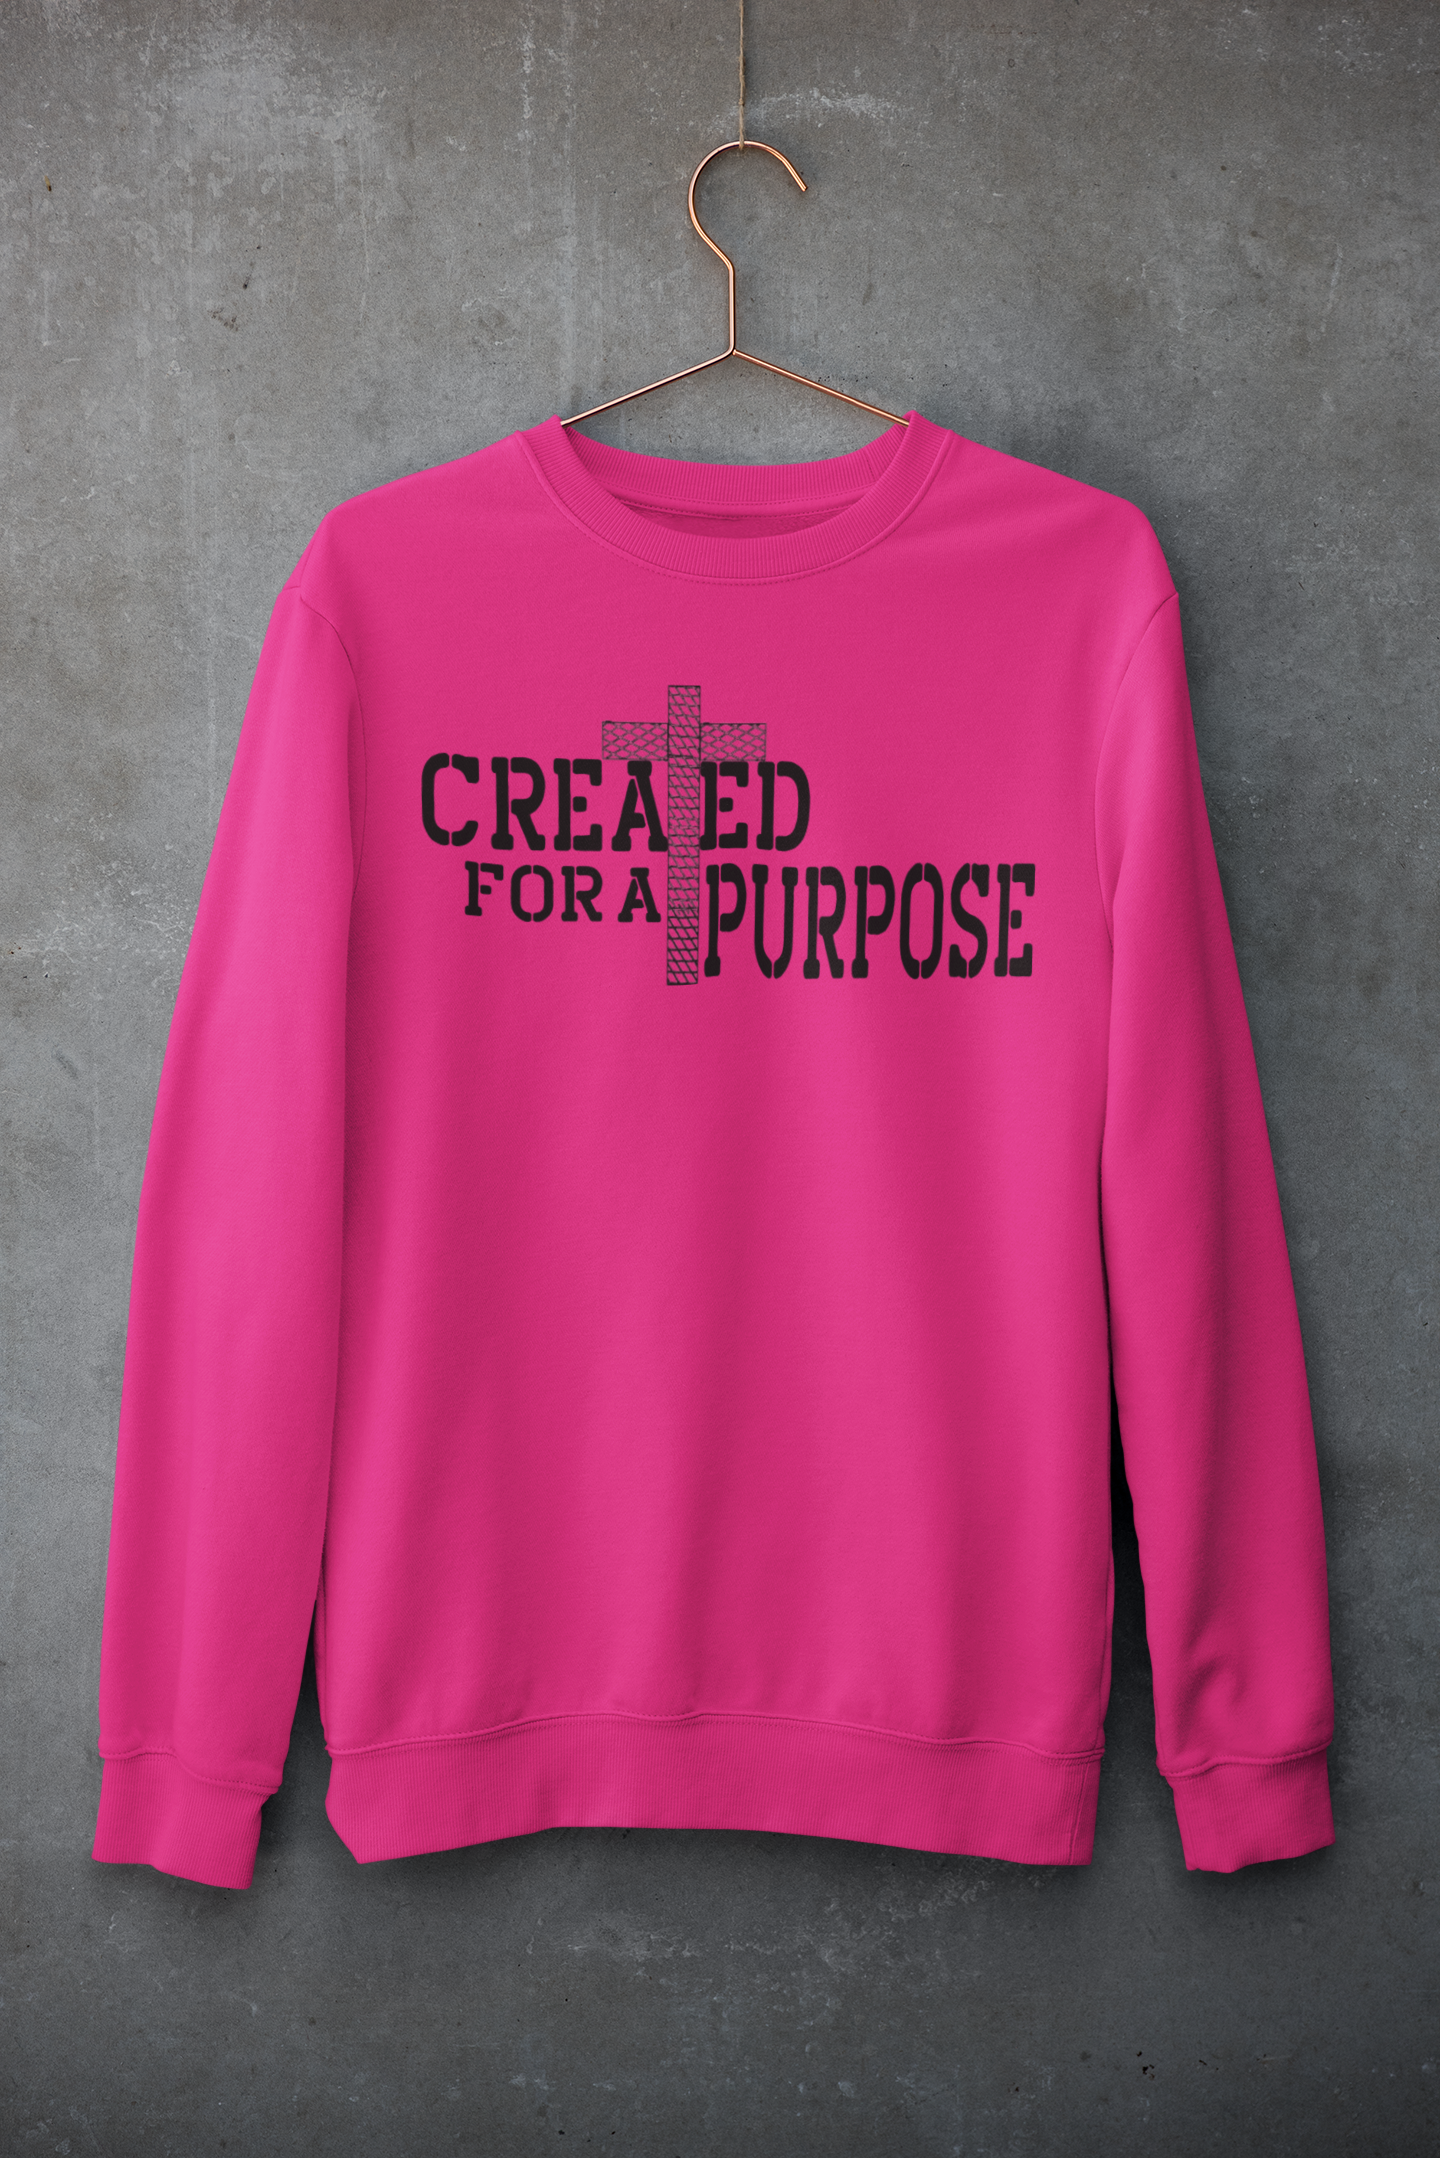 Created for a purpose Sweatshirt| Unisex Crewneck Sweatshirt| Graphic Design Crewneck Sweatshirt